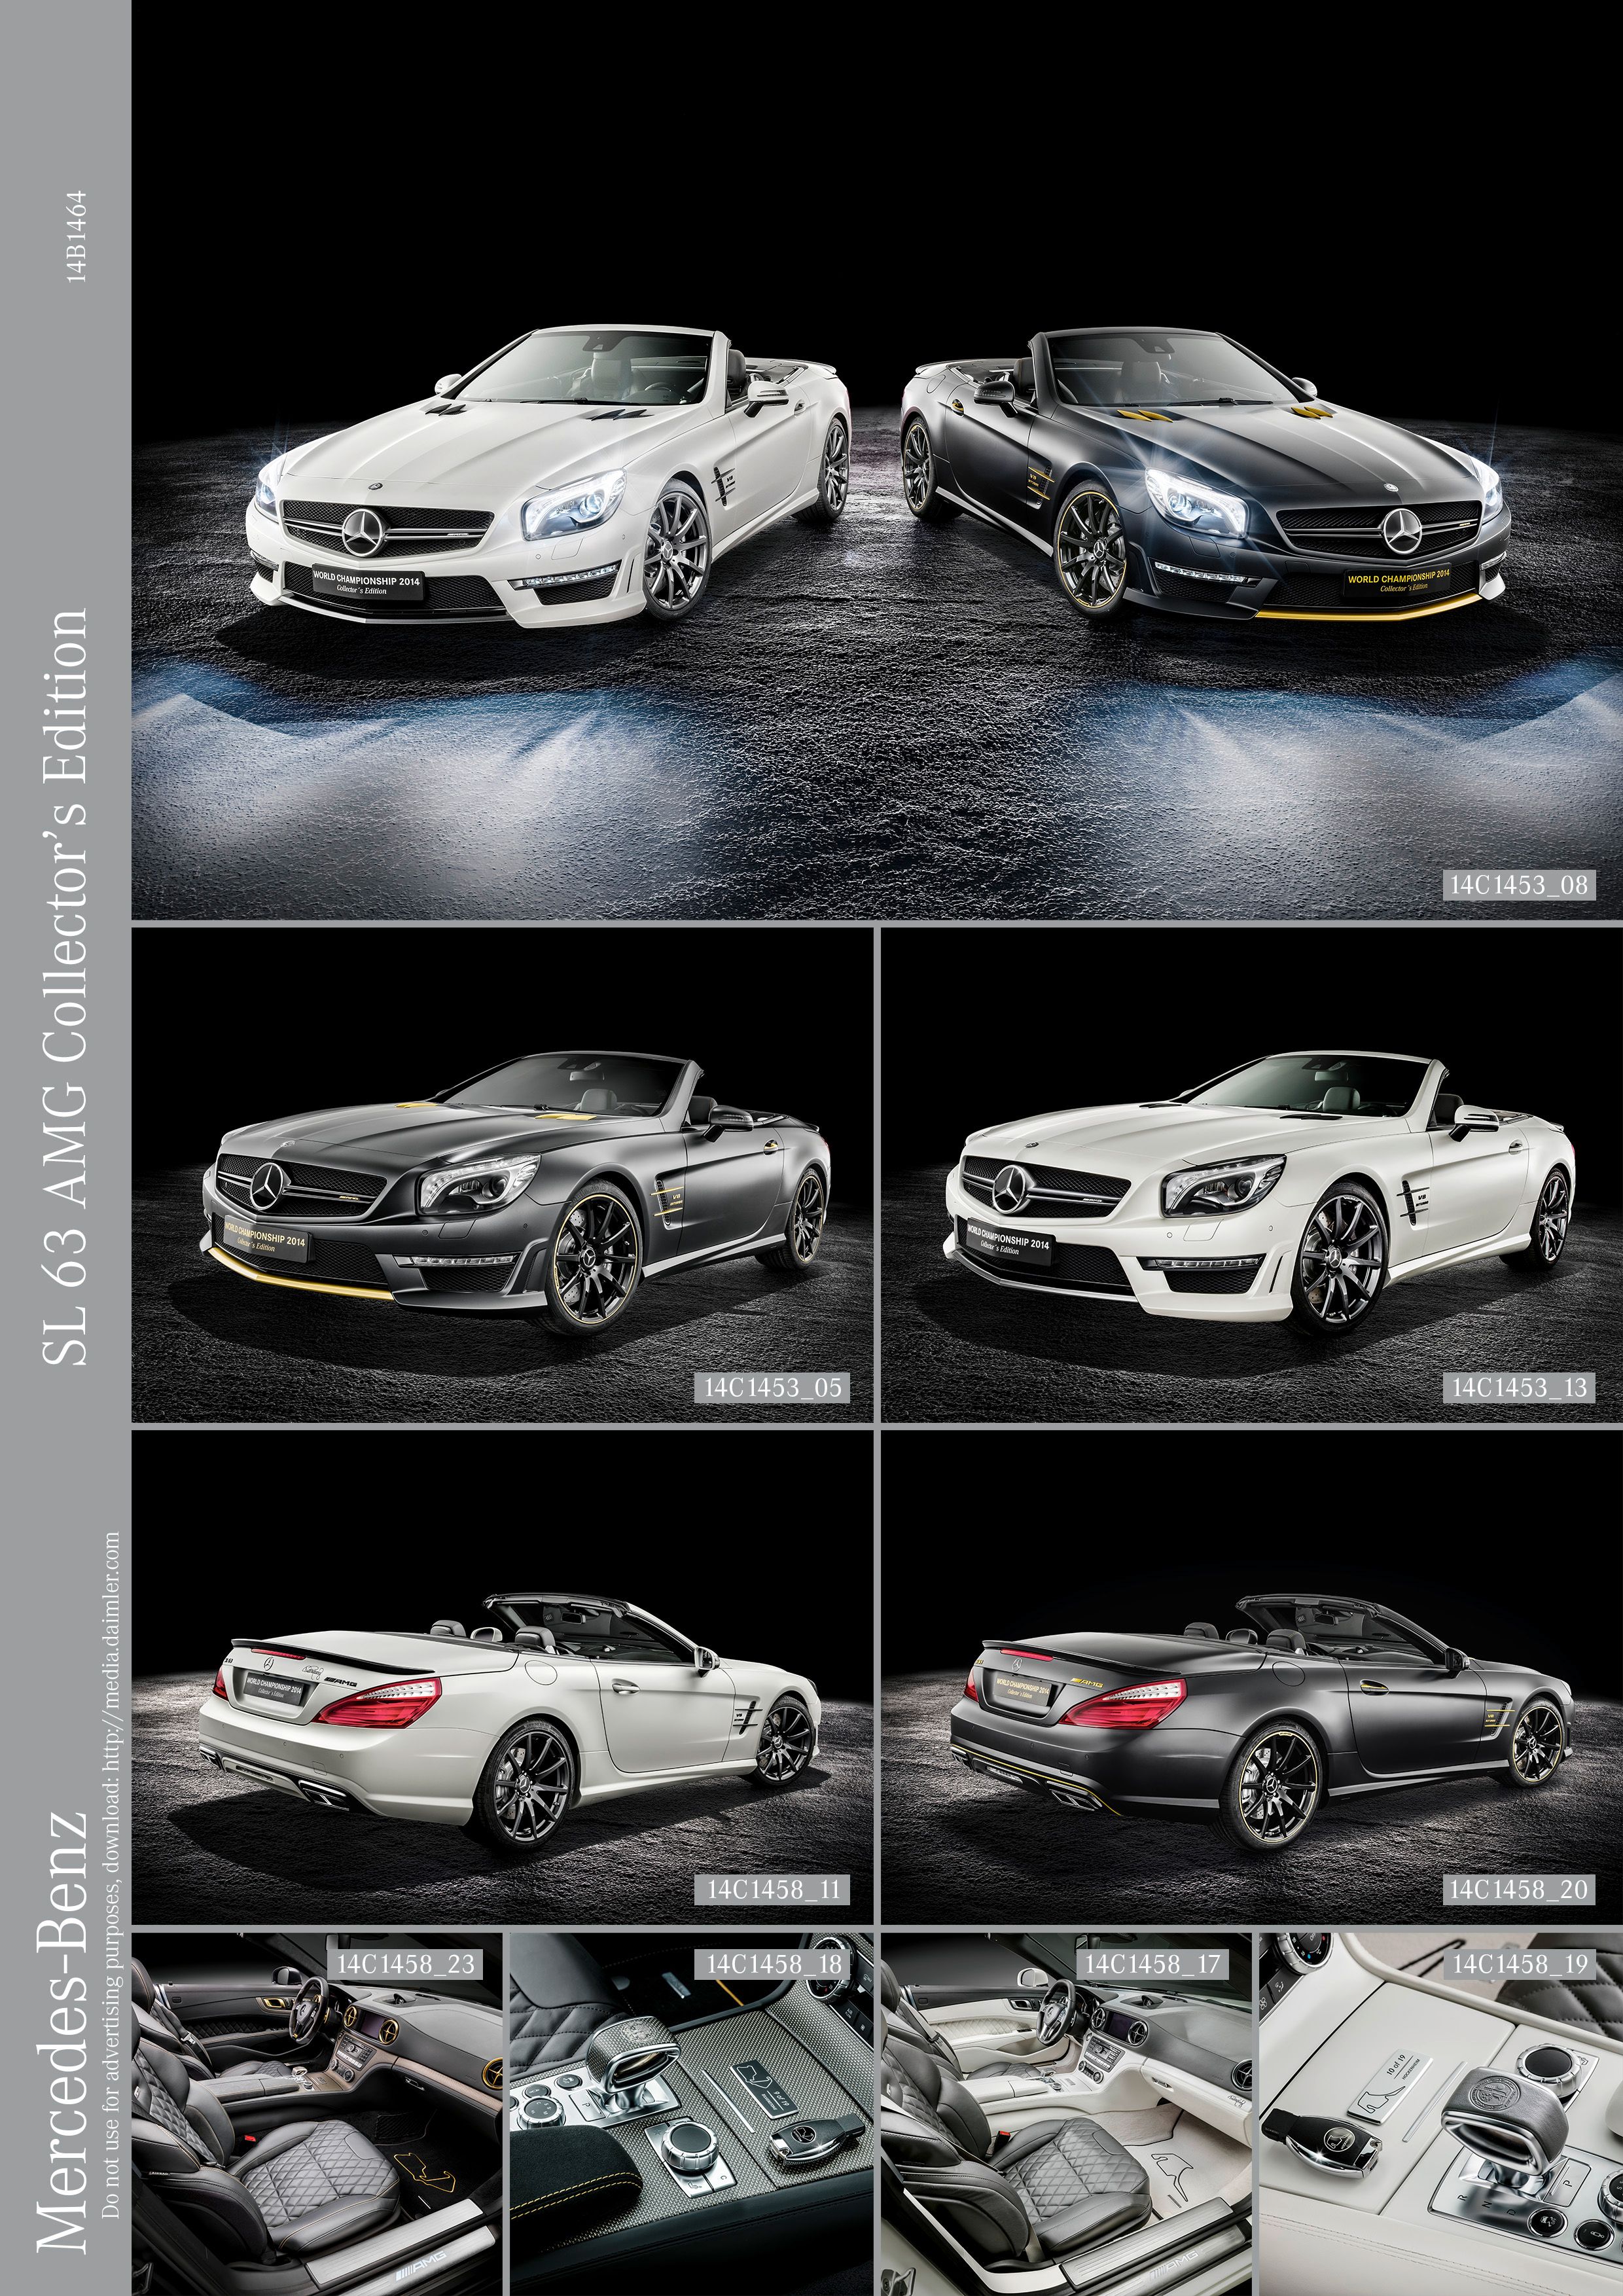 2014 Mercedes-Benz SL63 AMG World Championship 2014 Collector's Edition